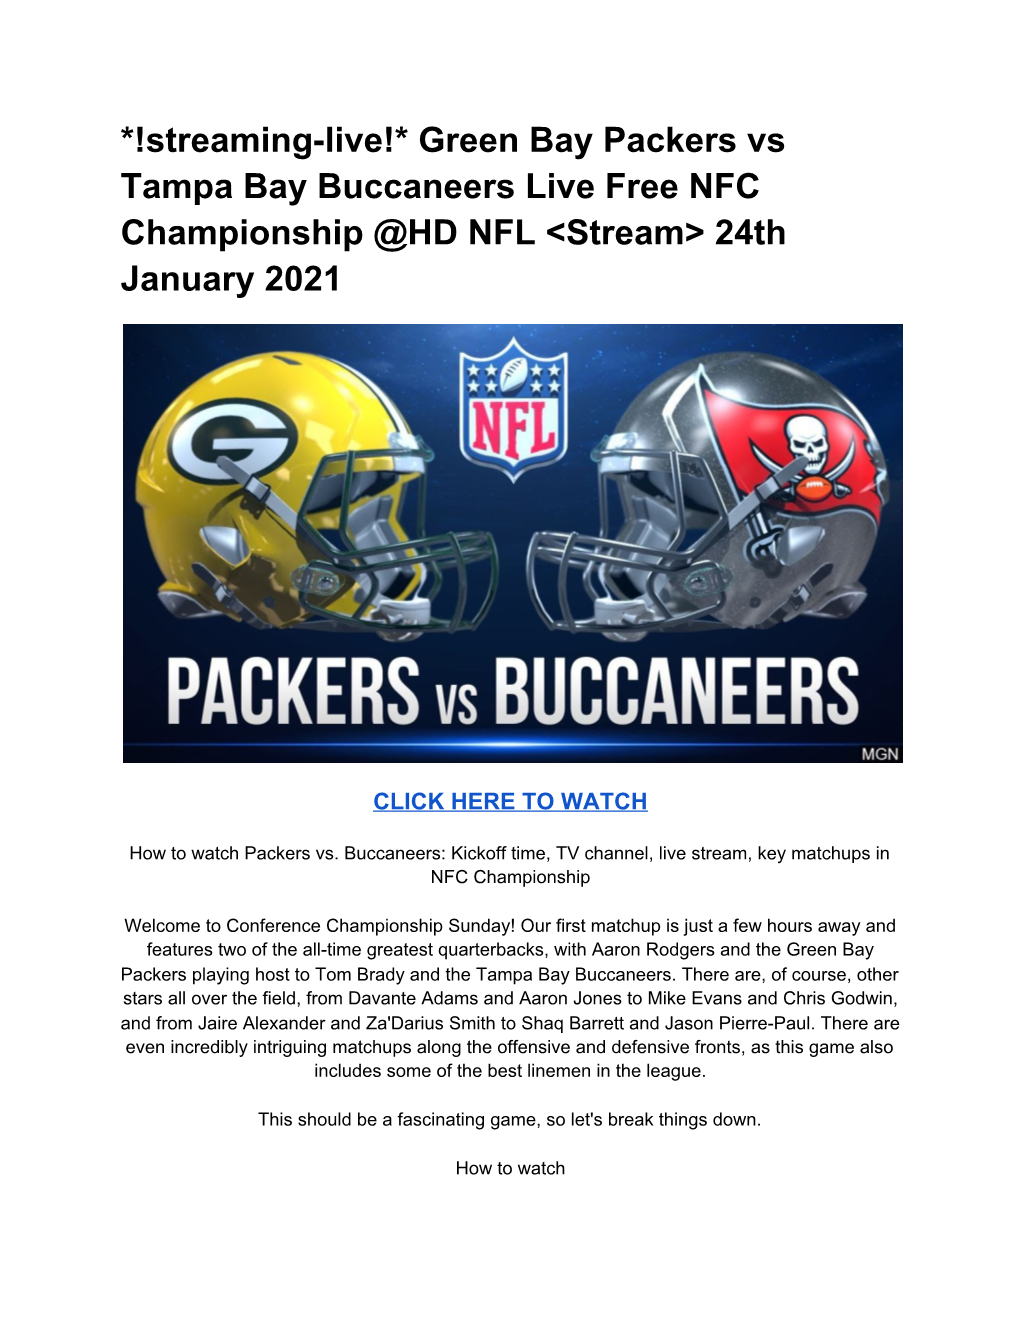 Green Bay Packers Vs Tampa Bay Buccaneers Live